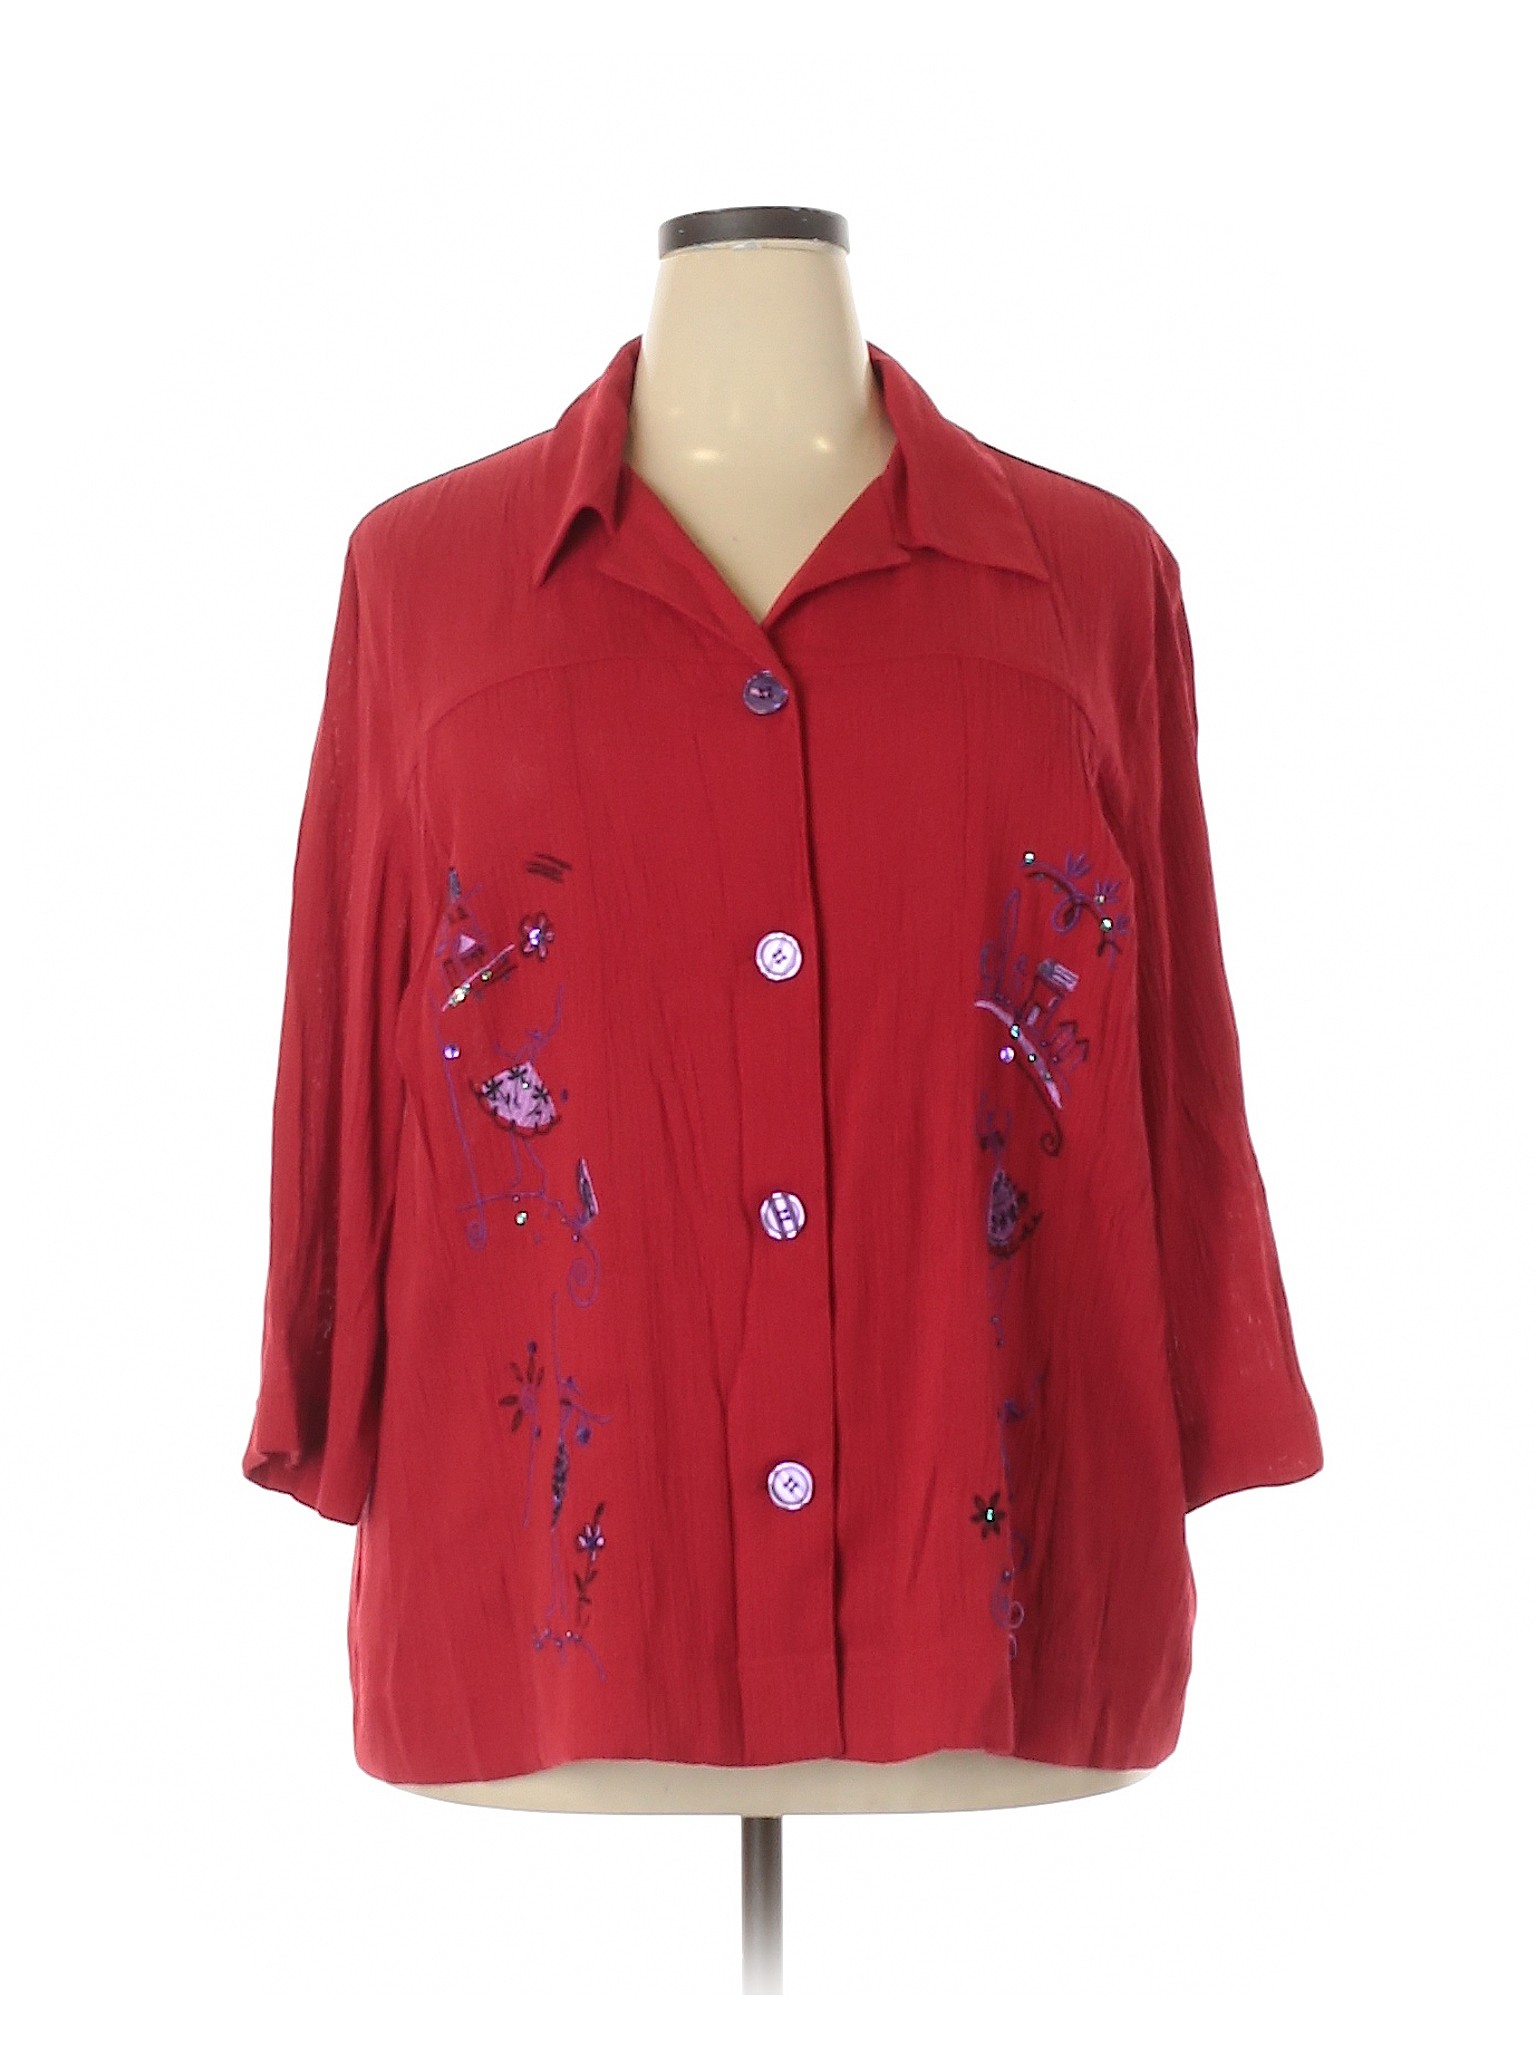 Koret Women Red 3/4 Sleeve Blouse 2 X Plus | eBay